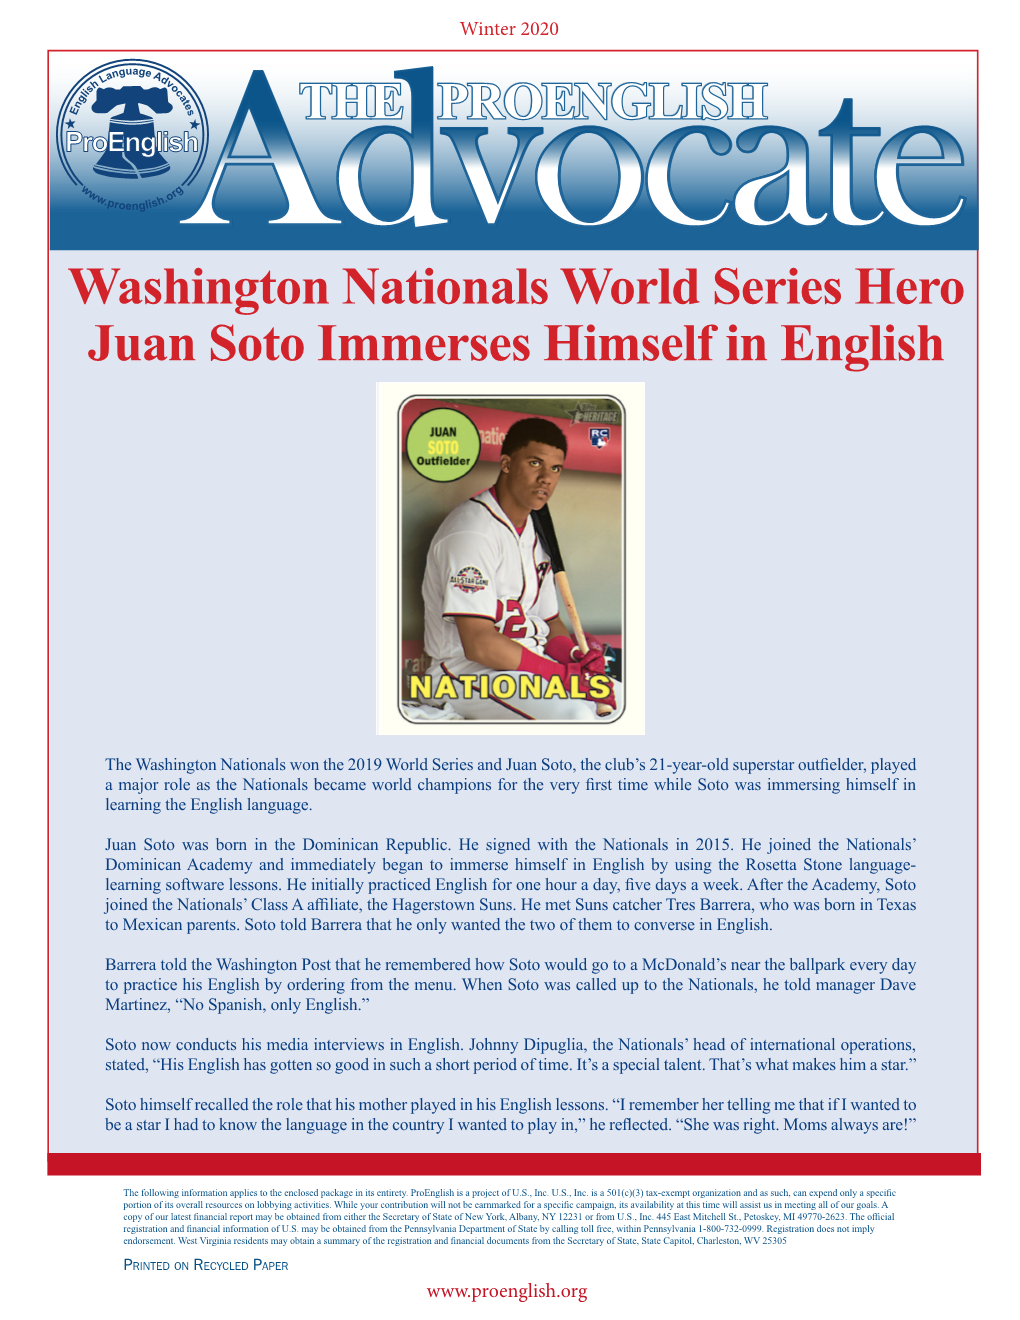 Washington Nationals World Series Hero Juan Soto Immerses Himself in English